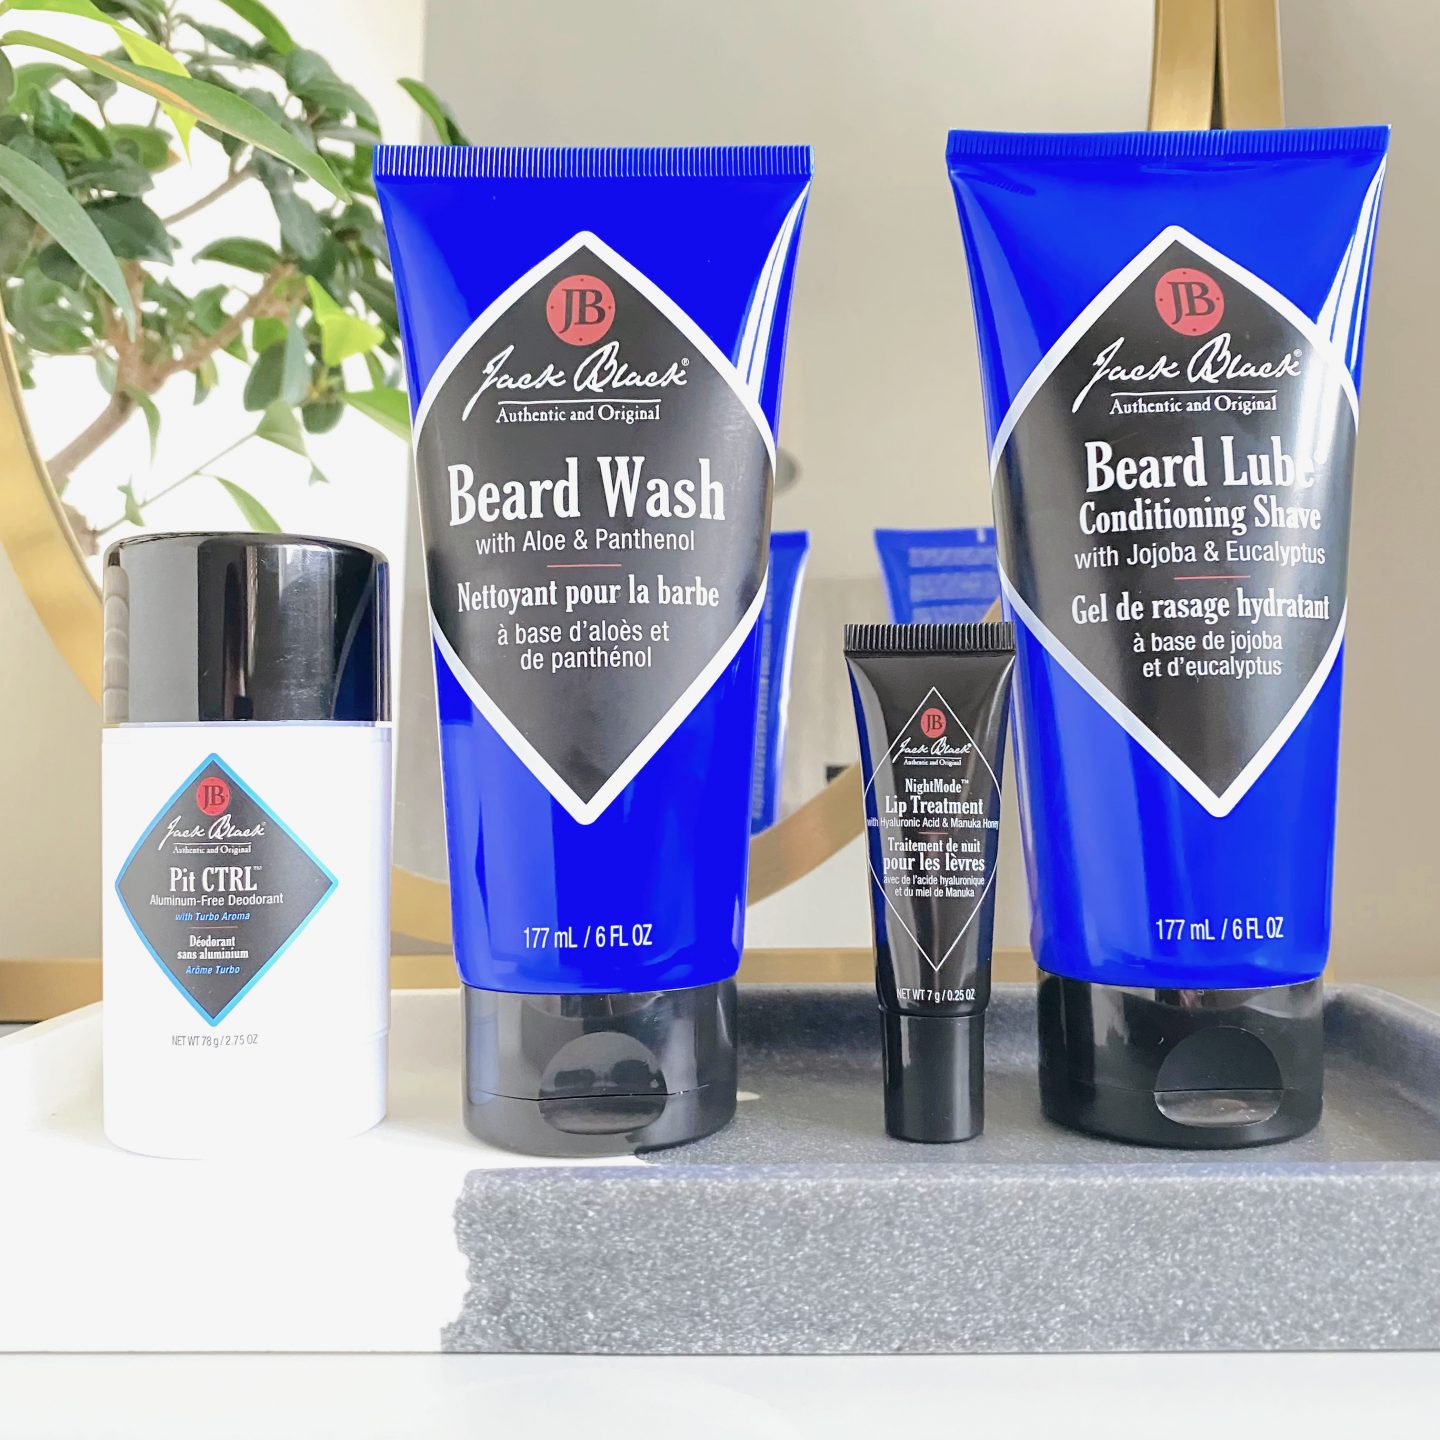 Jack Black Beard Lube Conditioning Shave Jack Black NightMode Lip Treatment Jack Black Pit CTRL Jack Black Beard Wash